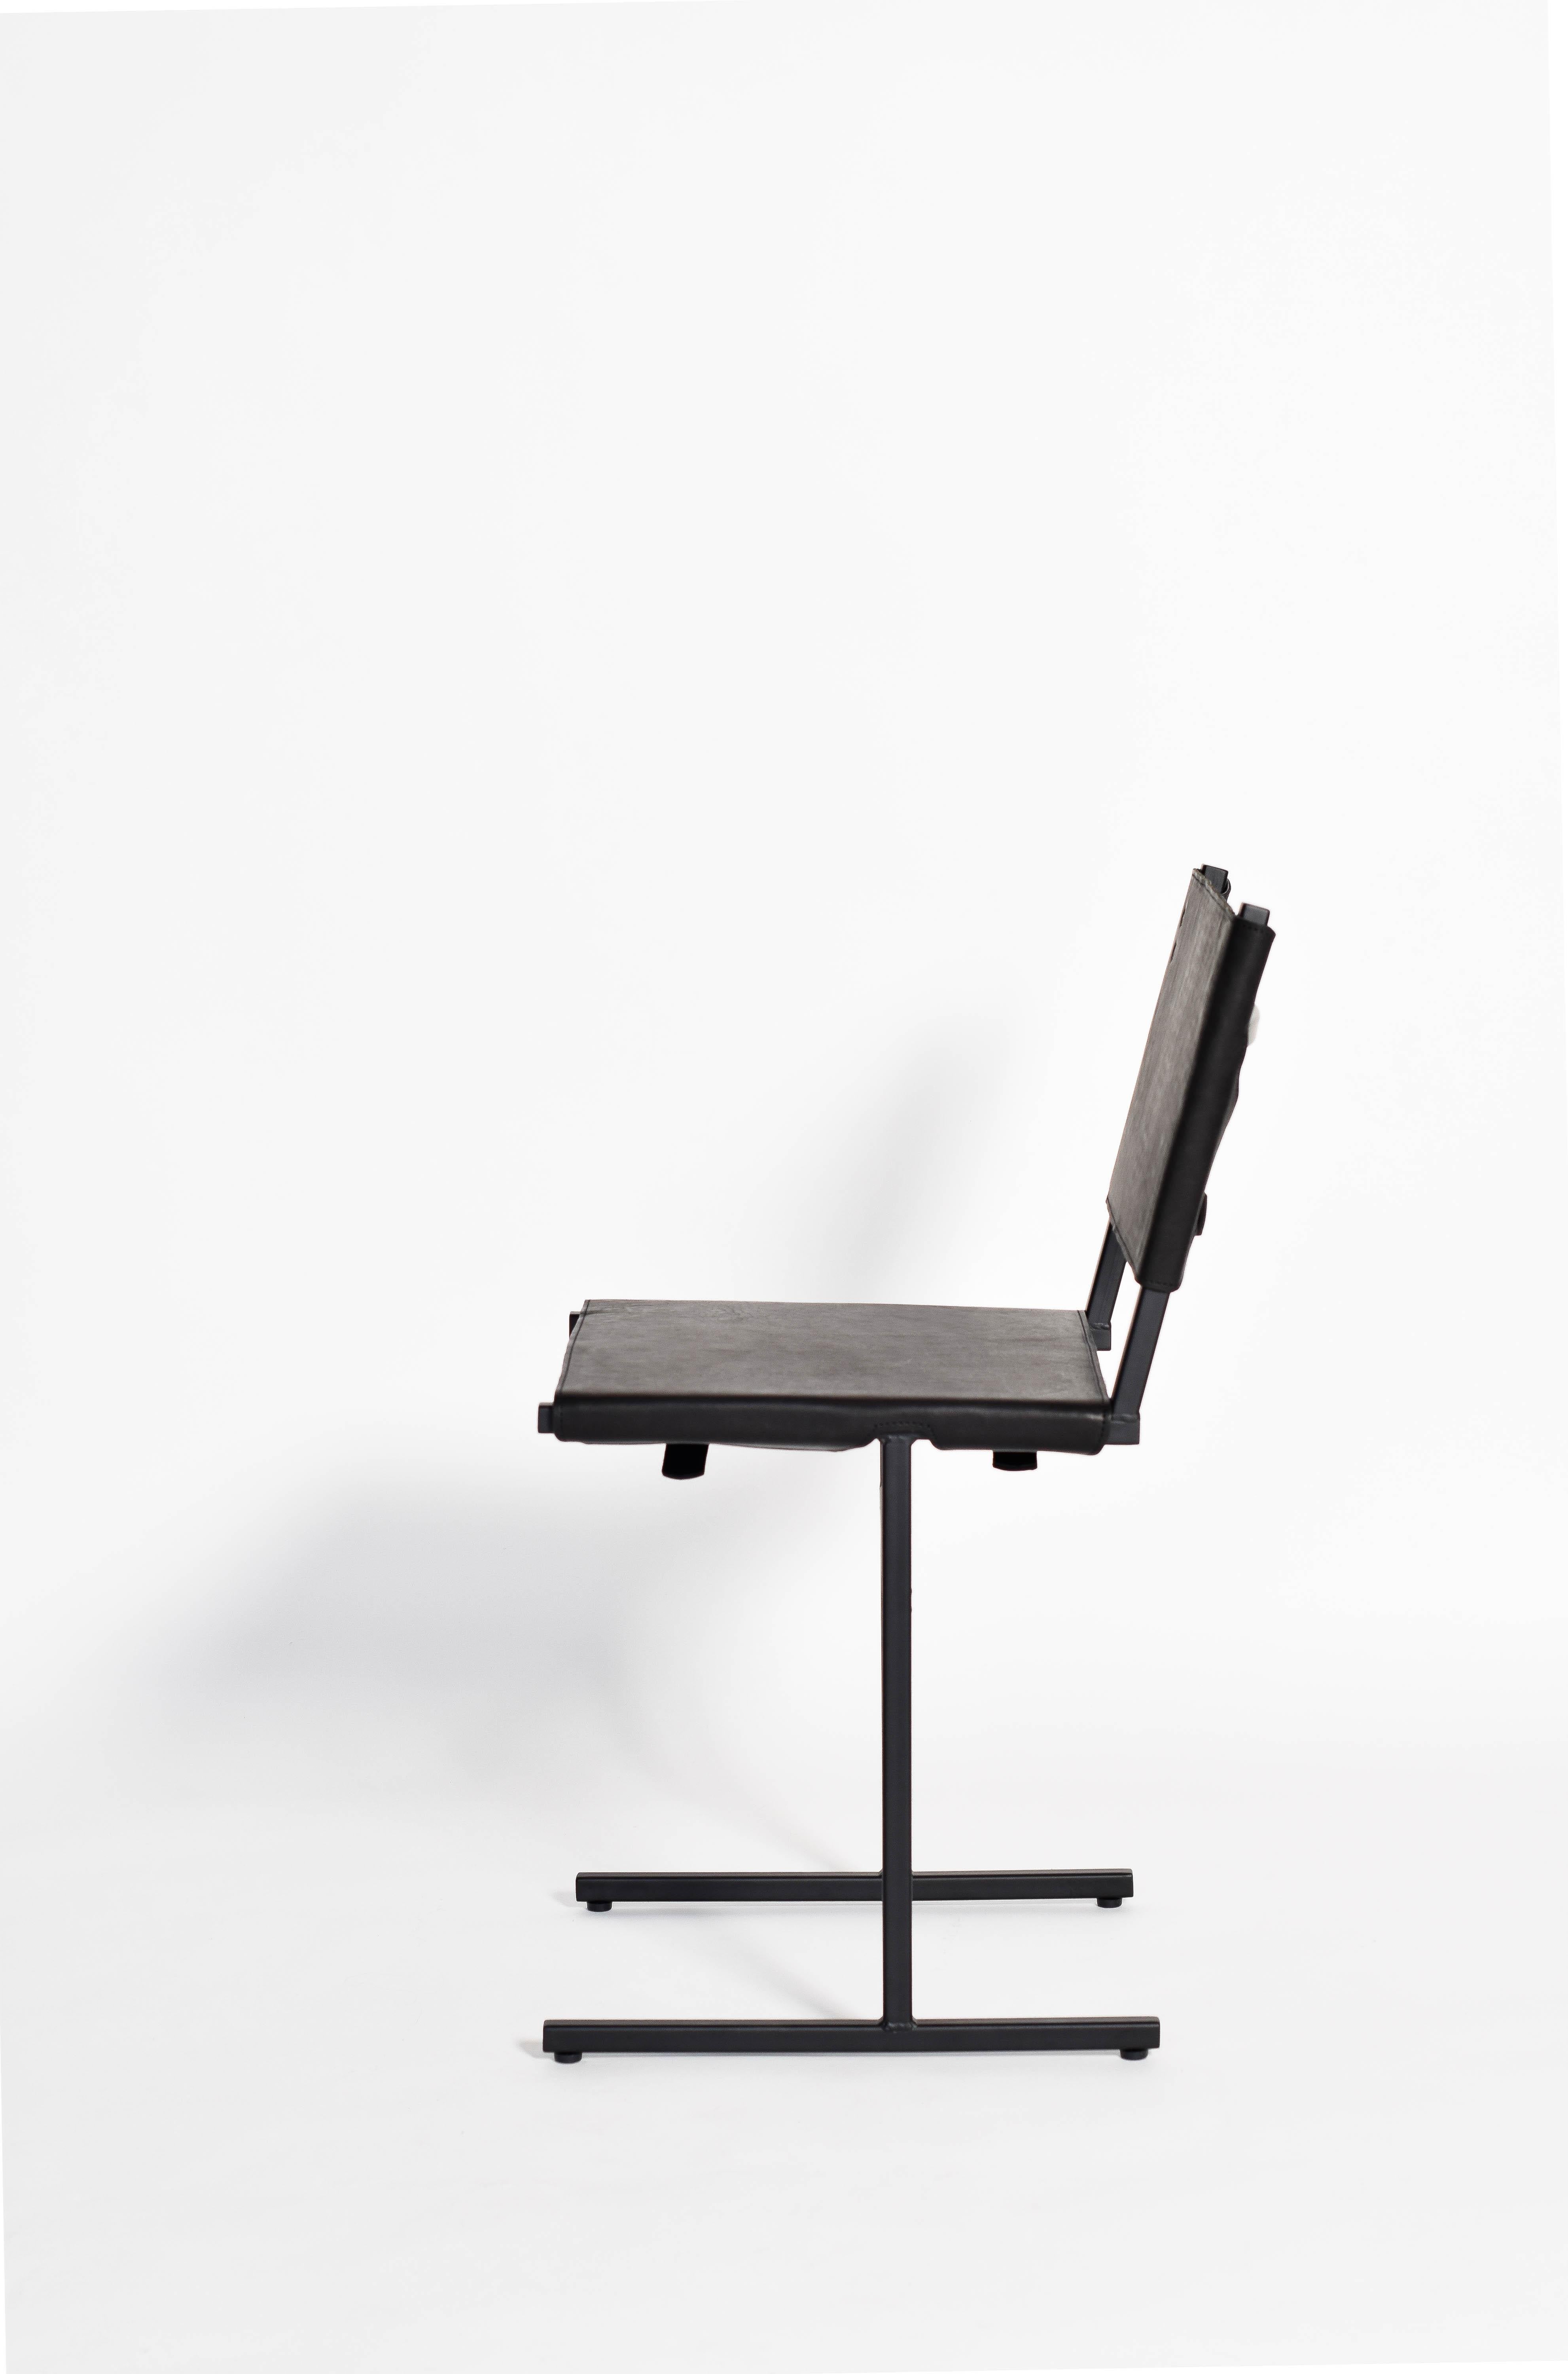 Chocolate and Black Memento Chair, Jesse Sanderson 2